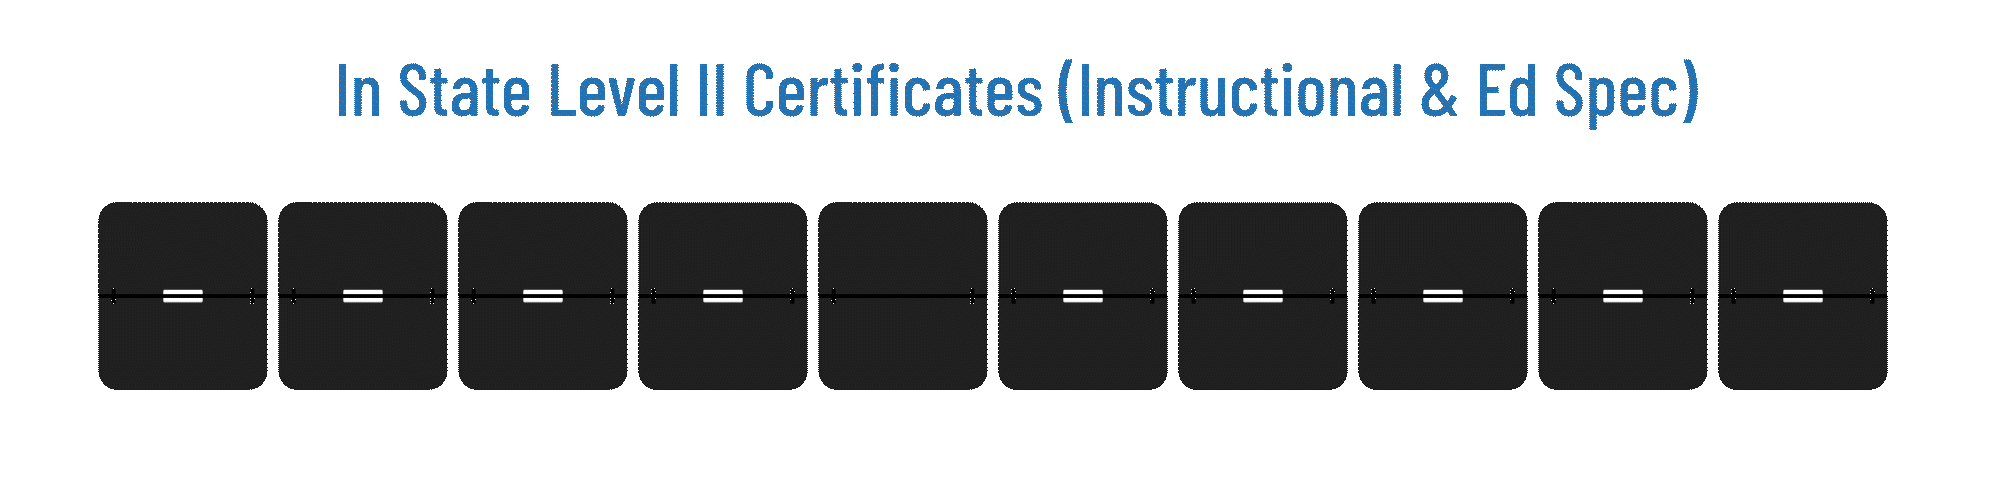 Level II Certificates (Instructional & Ed Spec) - Less than 1 week